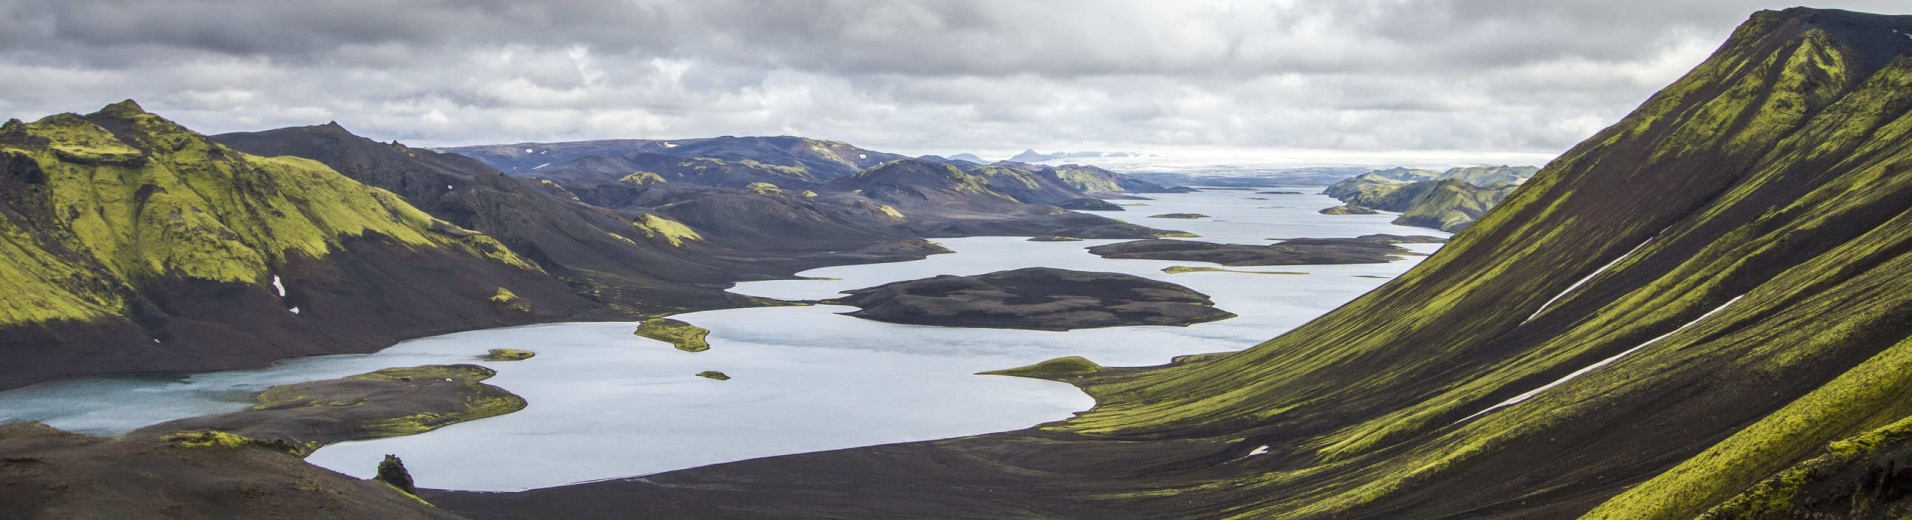 Hautes Terres du Sud de l'Islande